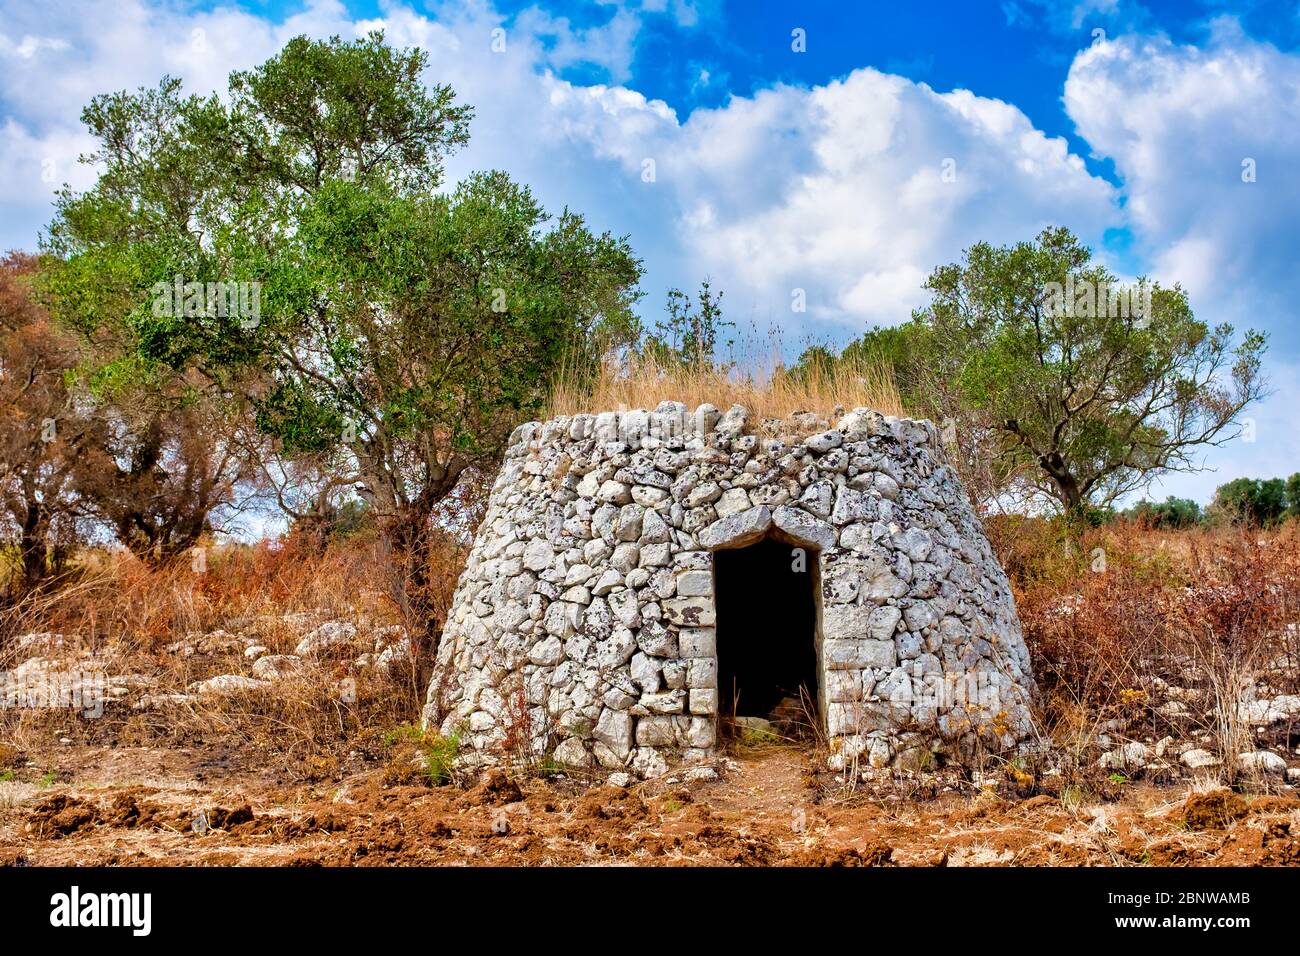 Casèdde, a traditional dry stone hut in the Salento Peninsula, Apulia, Italy Stock Photo